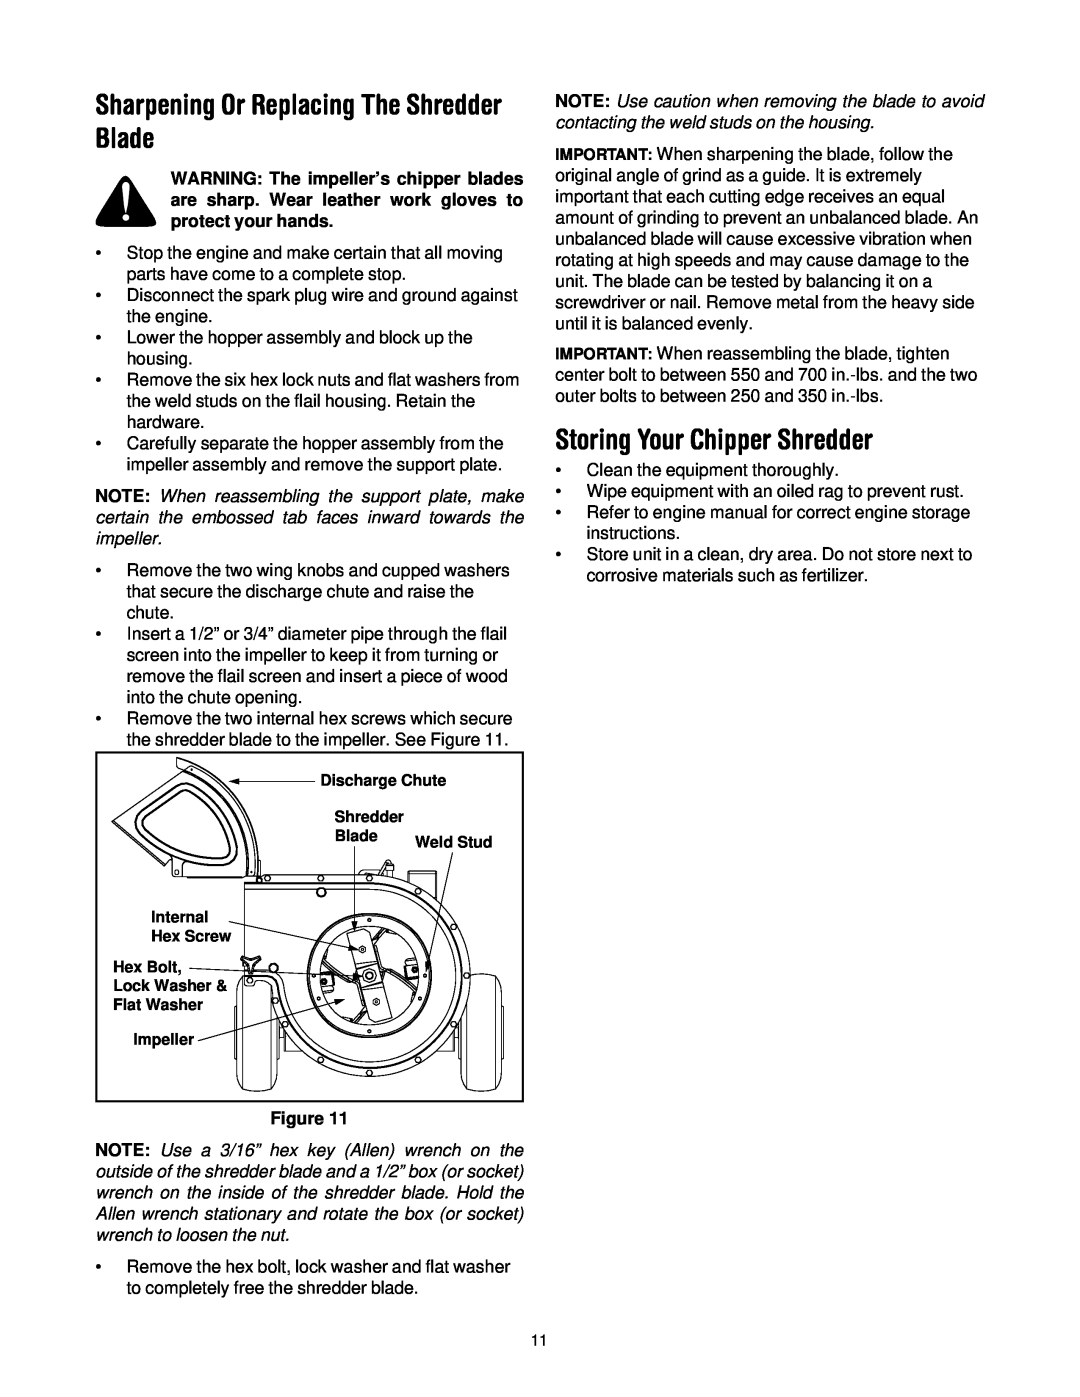 MTD 465 manual Sharpening Or Replacing The Shredder Blade, Storing Your Chipper Shredder 